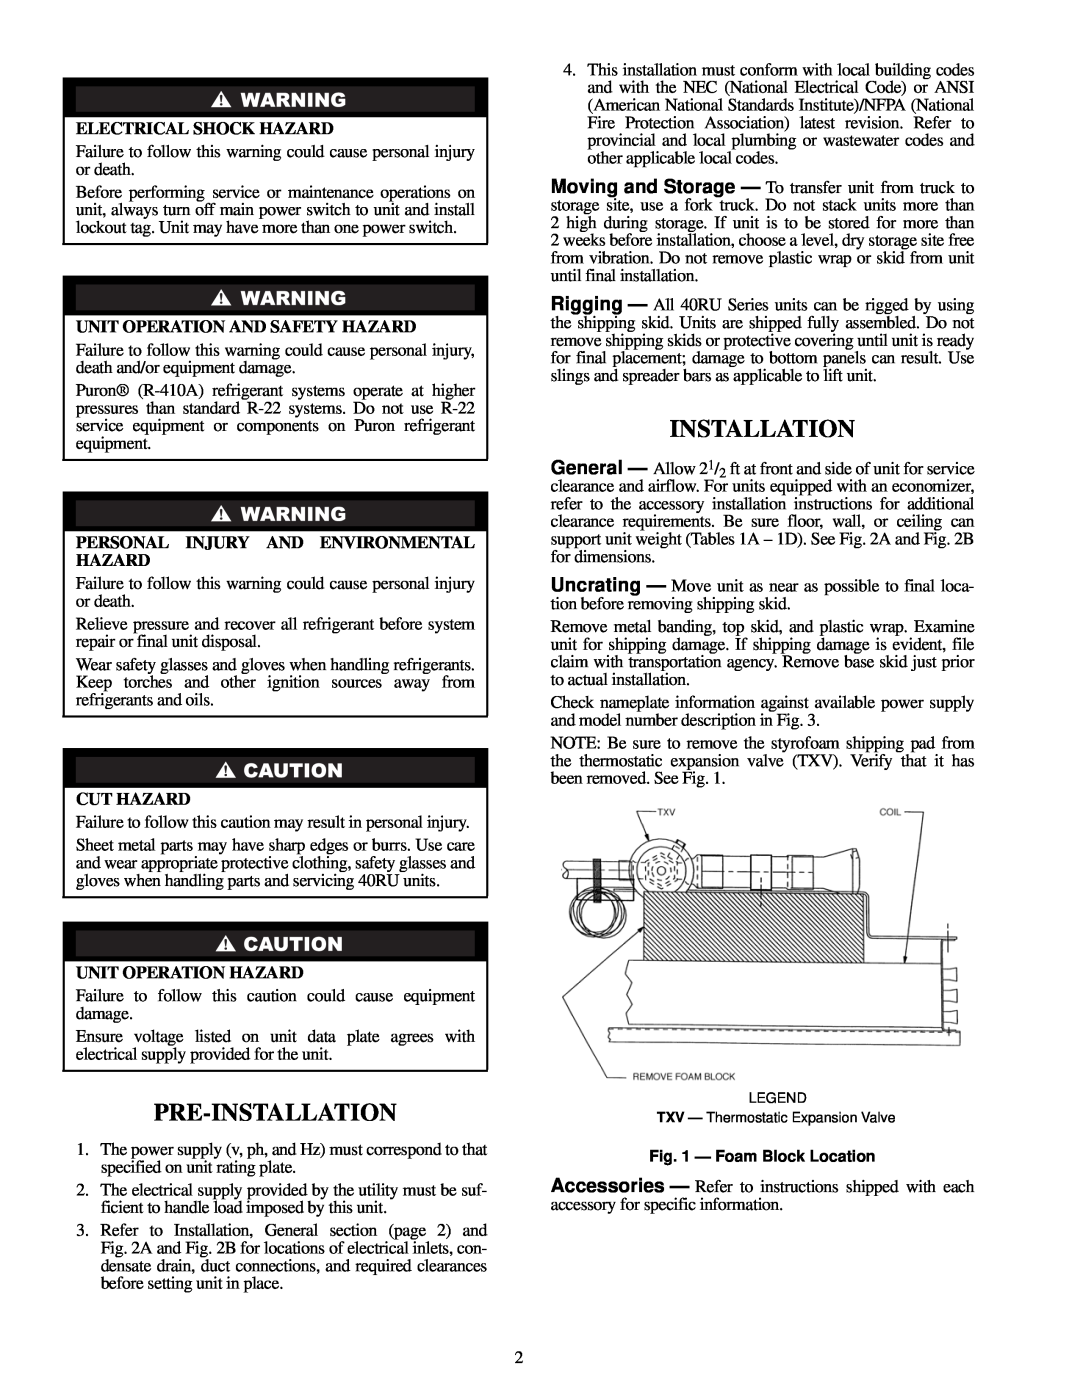 Carrier R-410A manual Pre-Installation, Electrical Shock Hazard, Unit Operation And Safety Hazard, Cut Hazard 